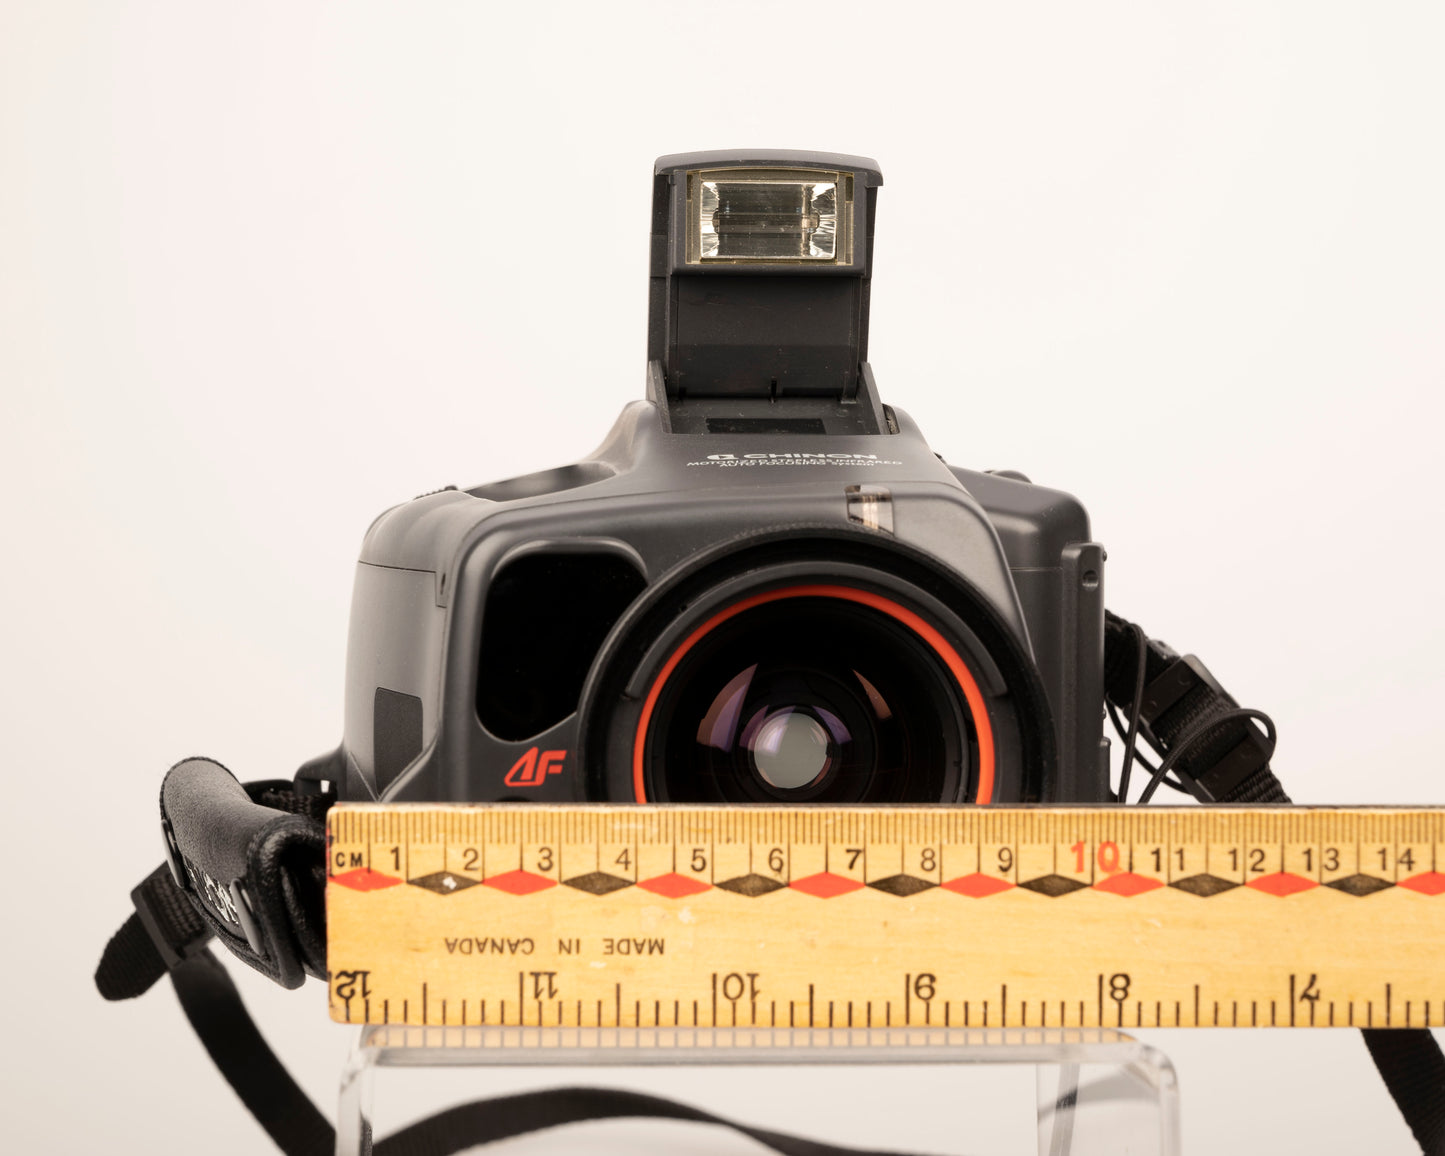 Chinon Genesis II 'bridge' 35mm film SLR w/ 35-80mm lens + carrying case + manual